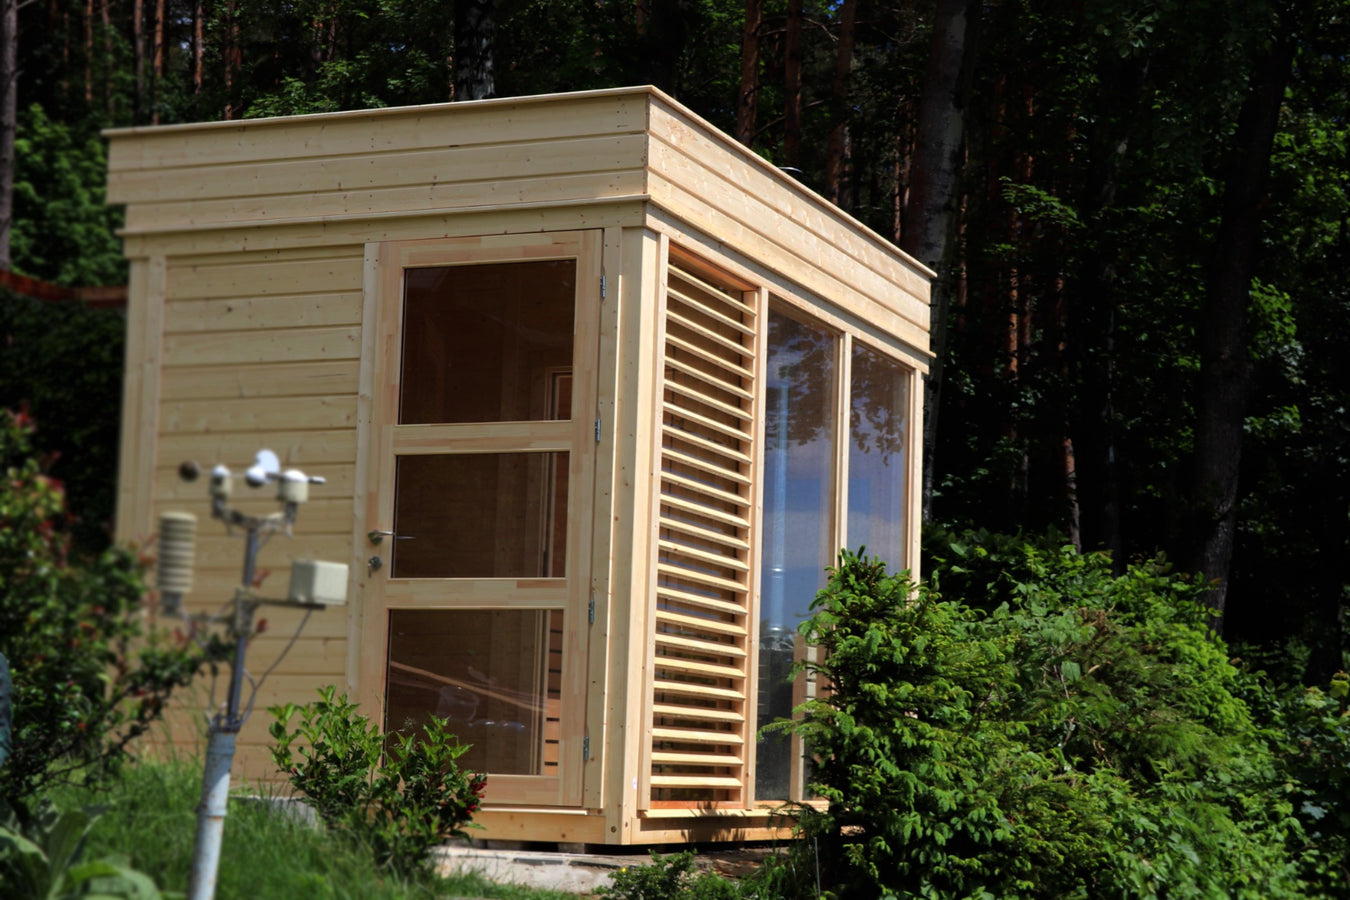 Sauna cube lifestyle outdoor arrangement on a wooden platform